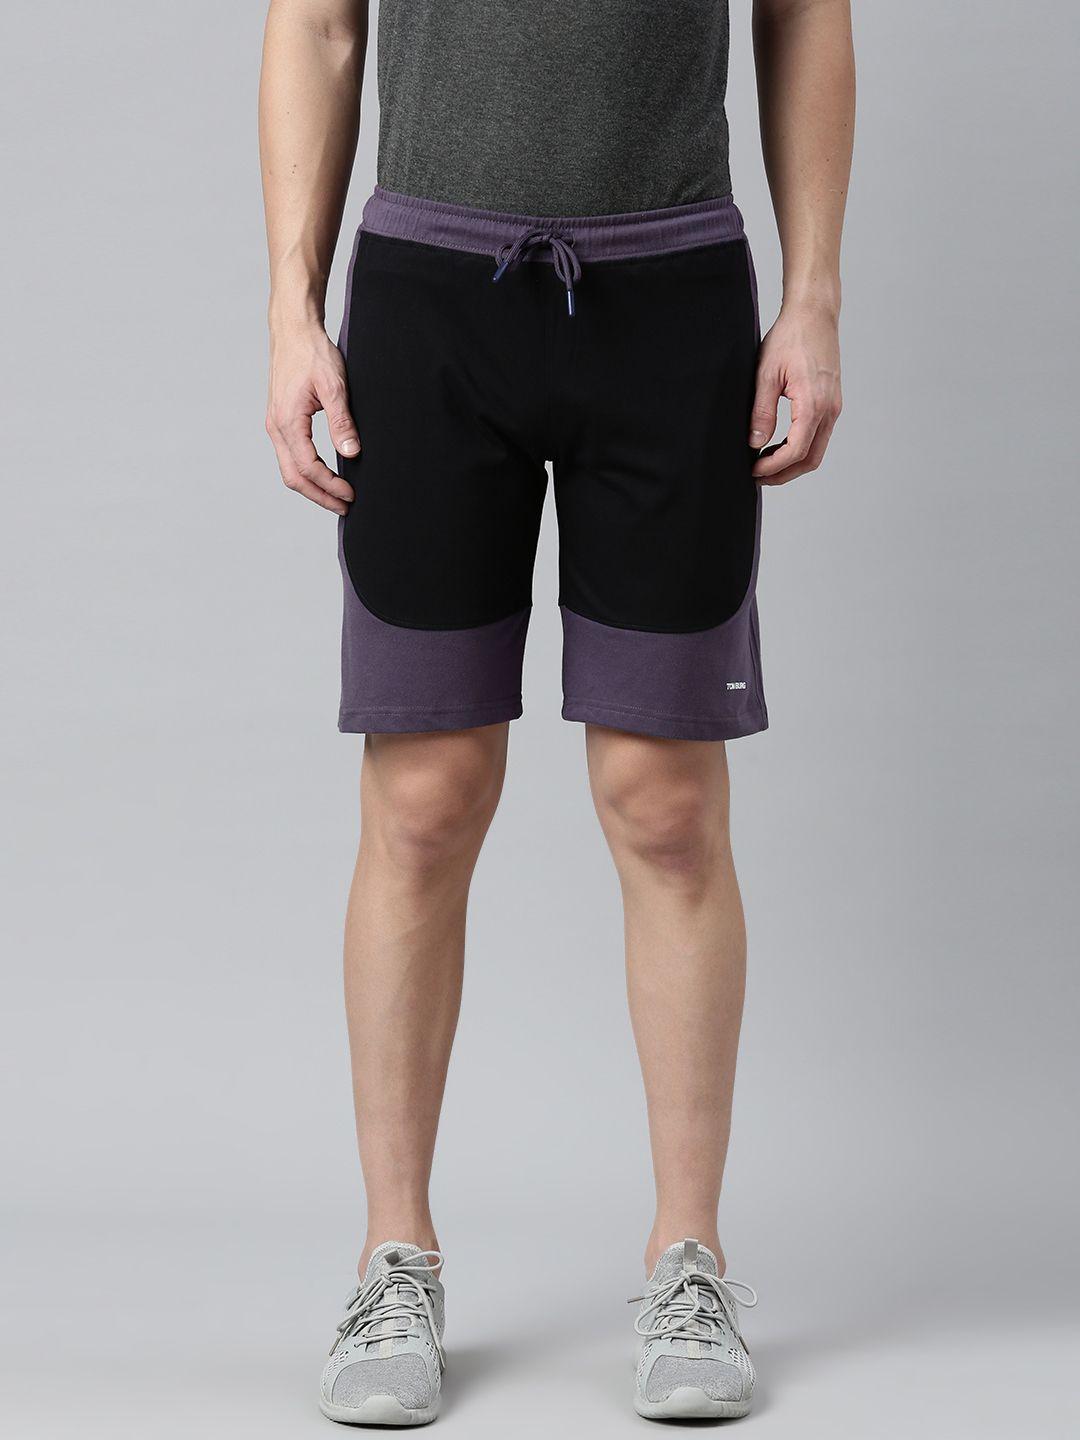 tom burg men black & charcoal grey colourblocked premium cotton slim fit sports shorts